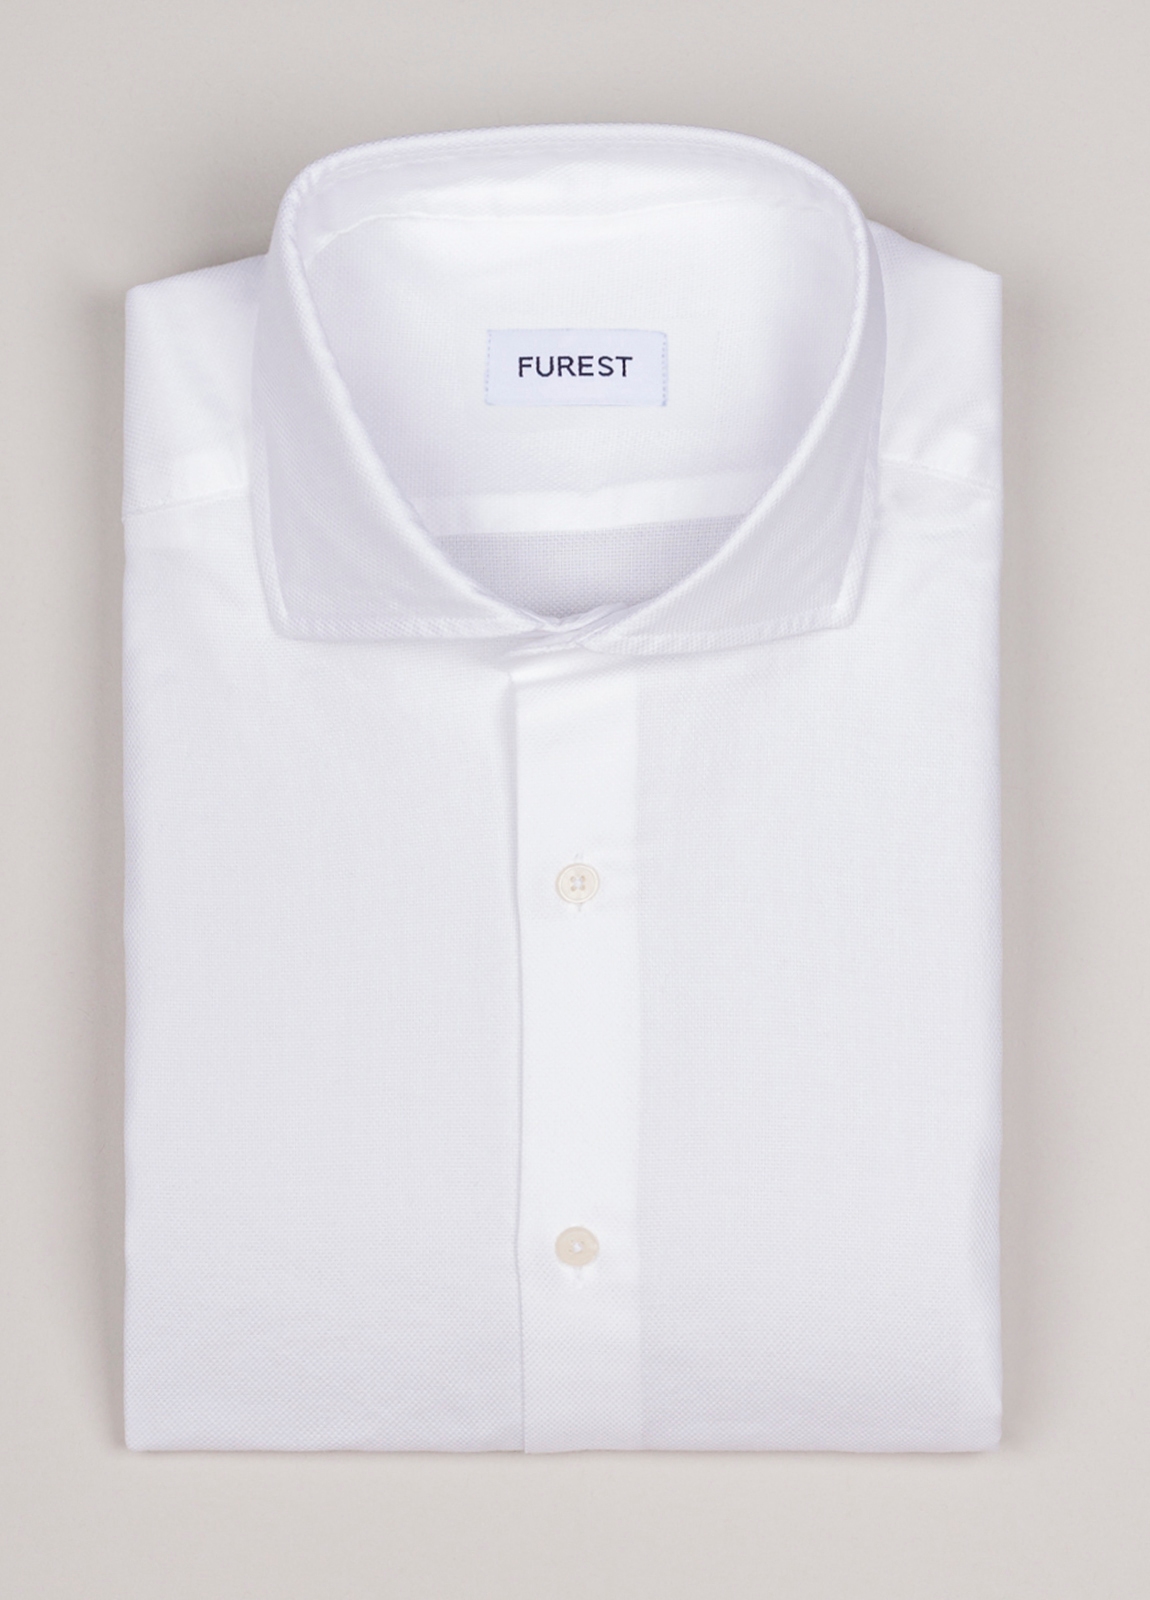 Camisa sport FUREST COLECCION textura blanco - Ítem1